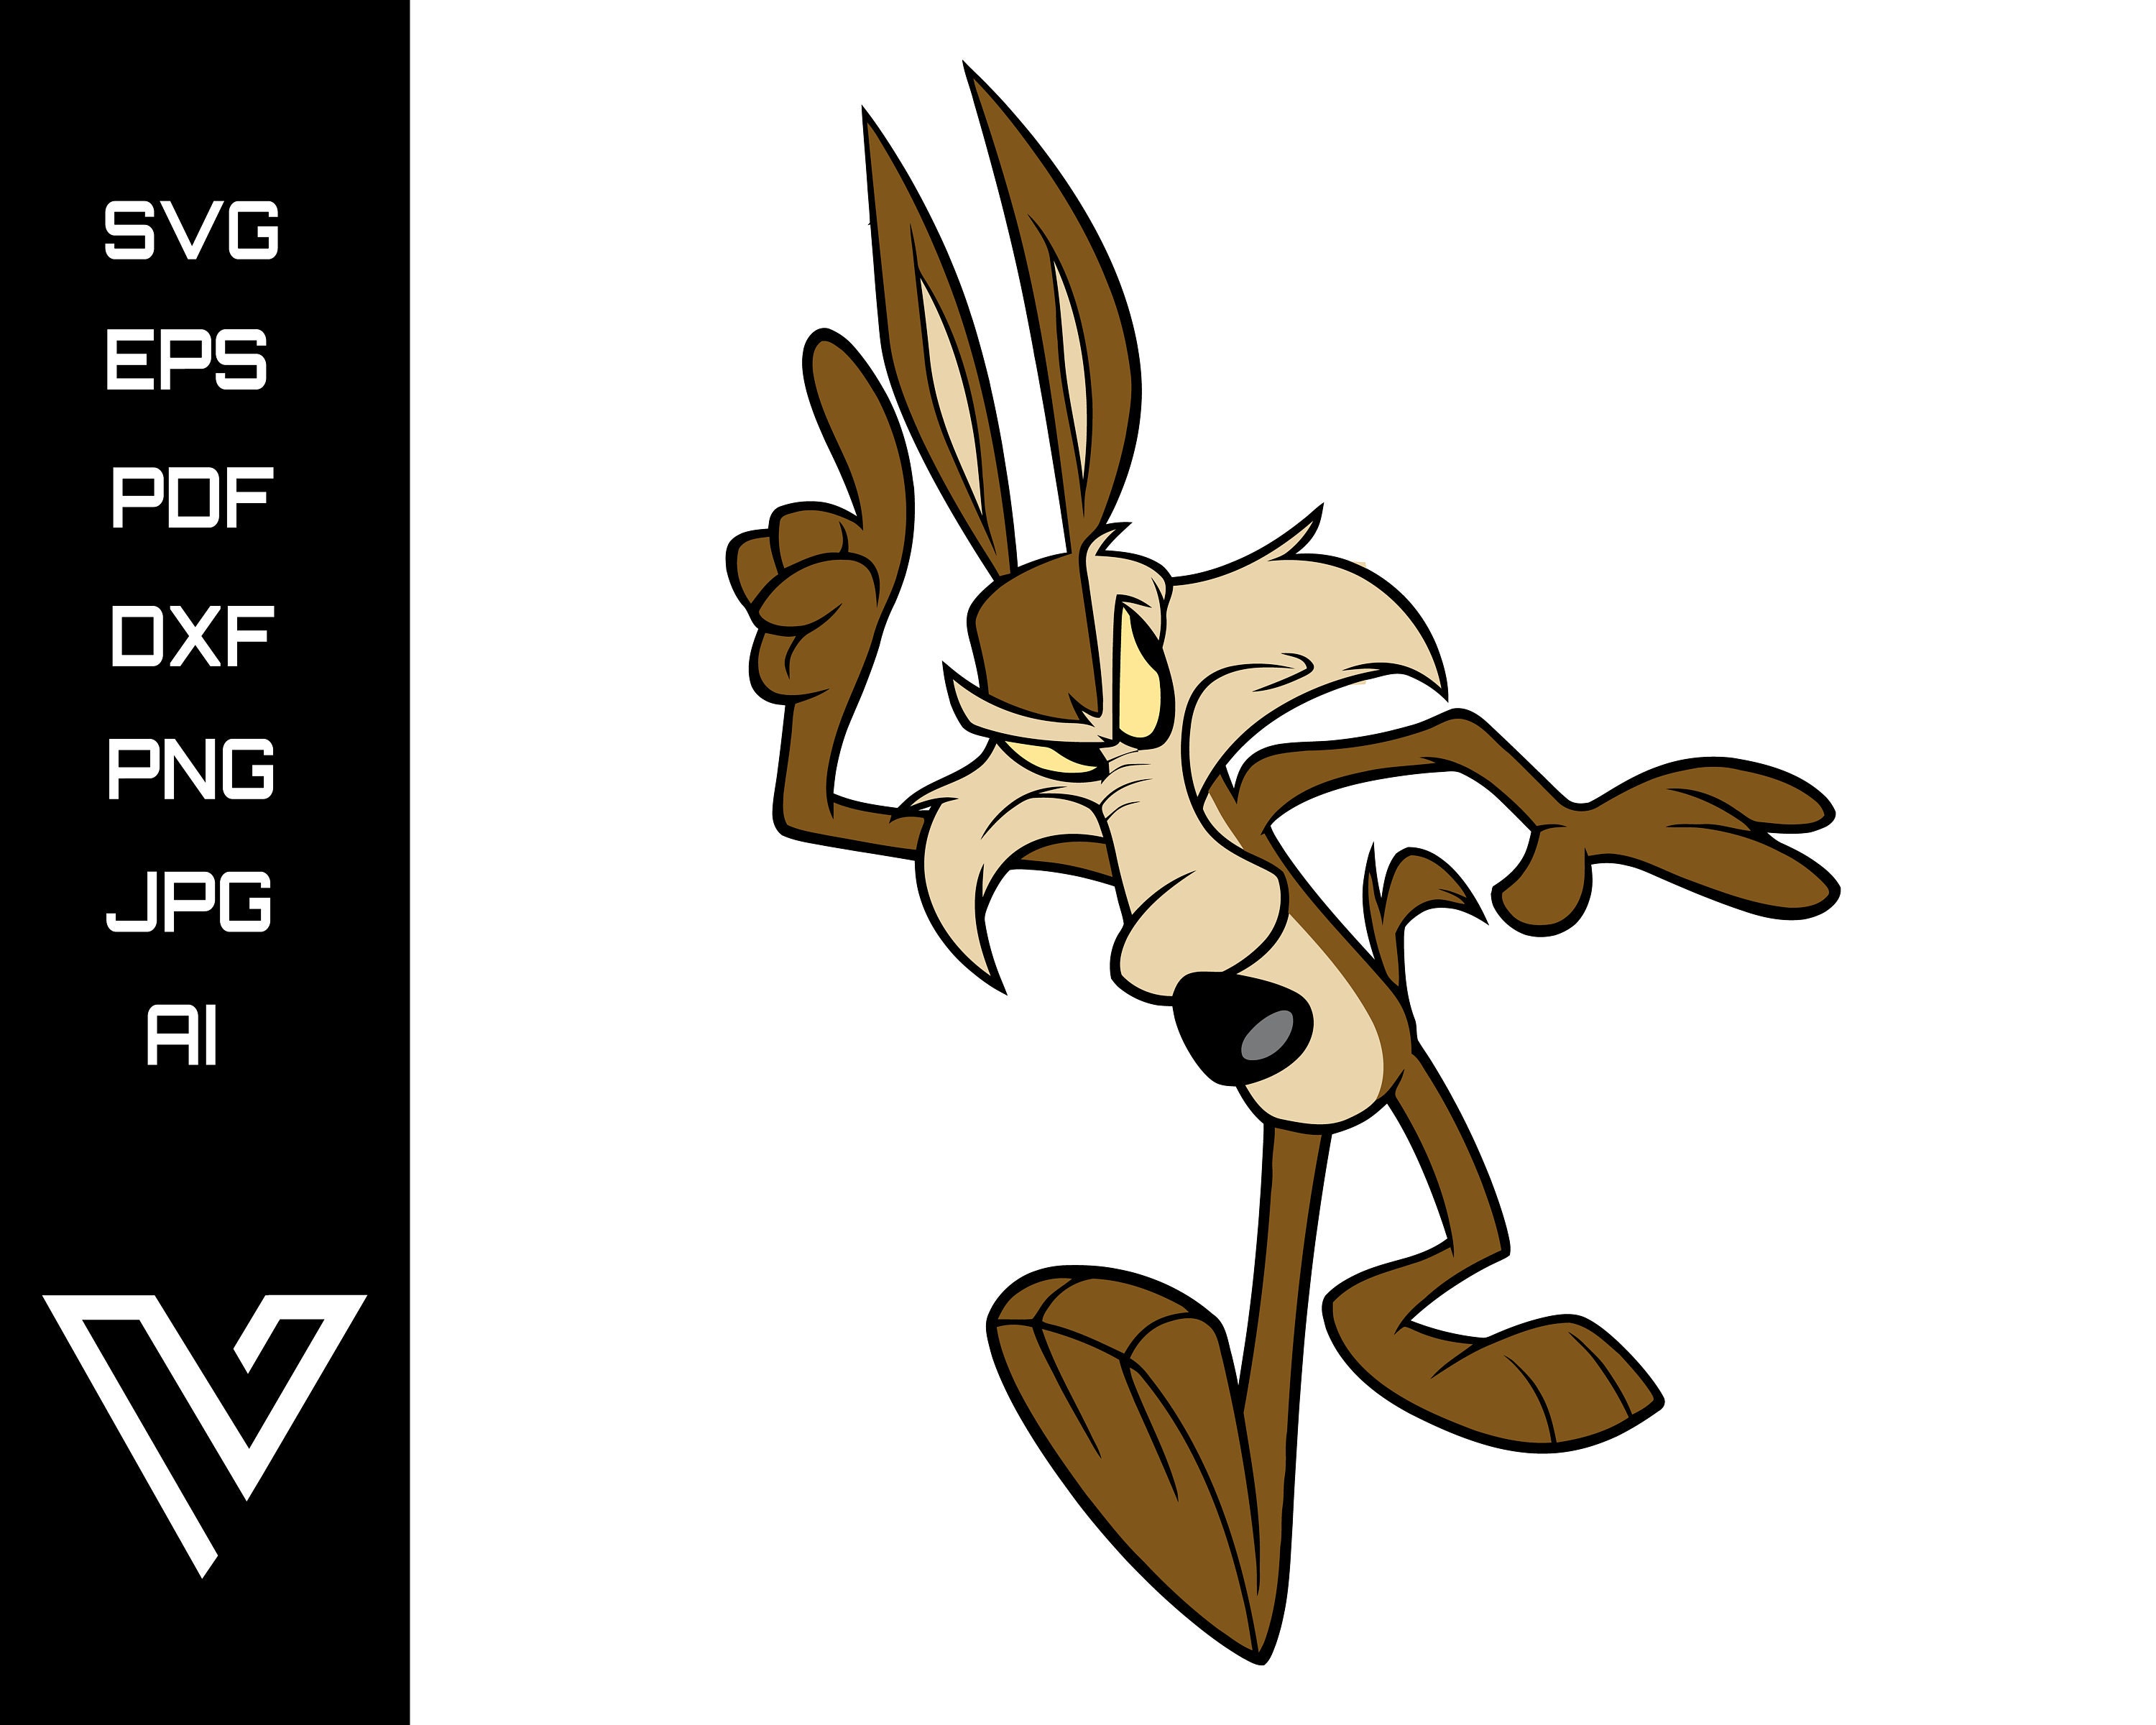 Wile E Coyote Roadrunner Looney Tunes Layered SVG Cricut Cut File Silhouett...